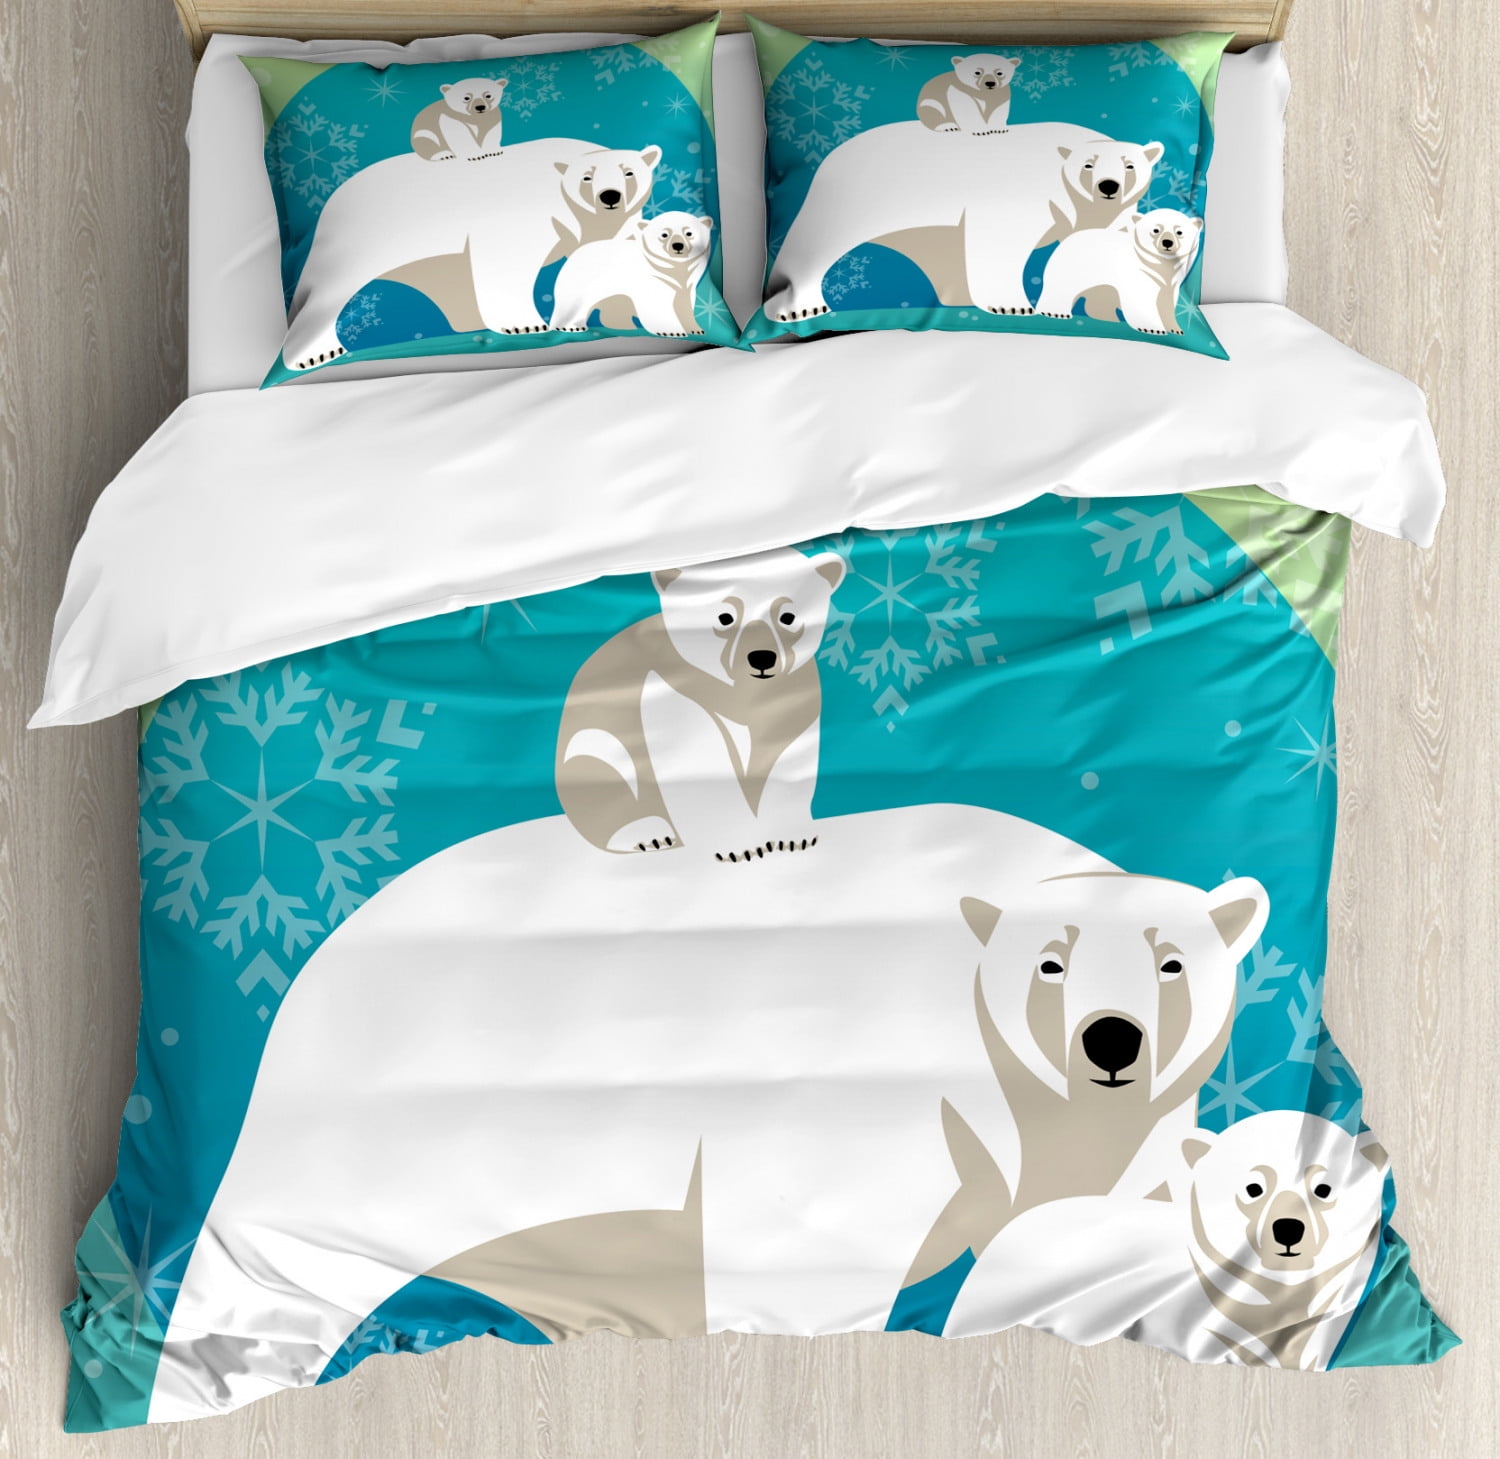 Blue Polar Bear Queen Size Sheet Set New In Package Free Shipping Deep Pocket